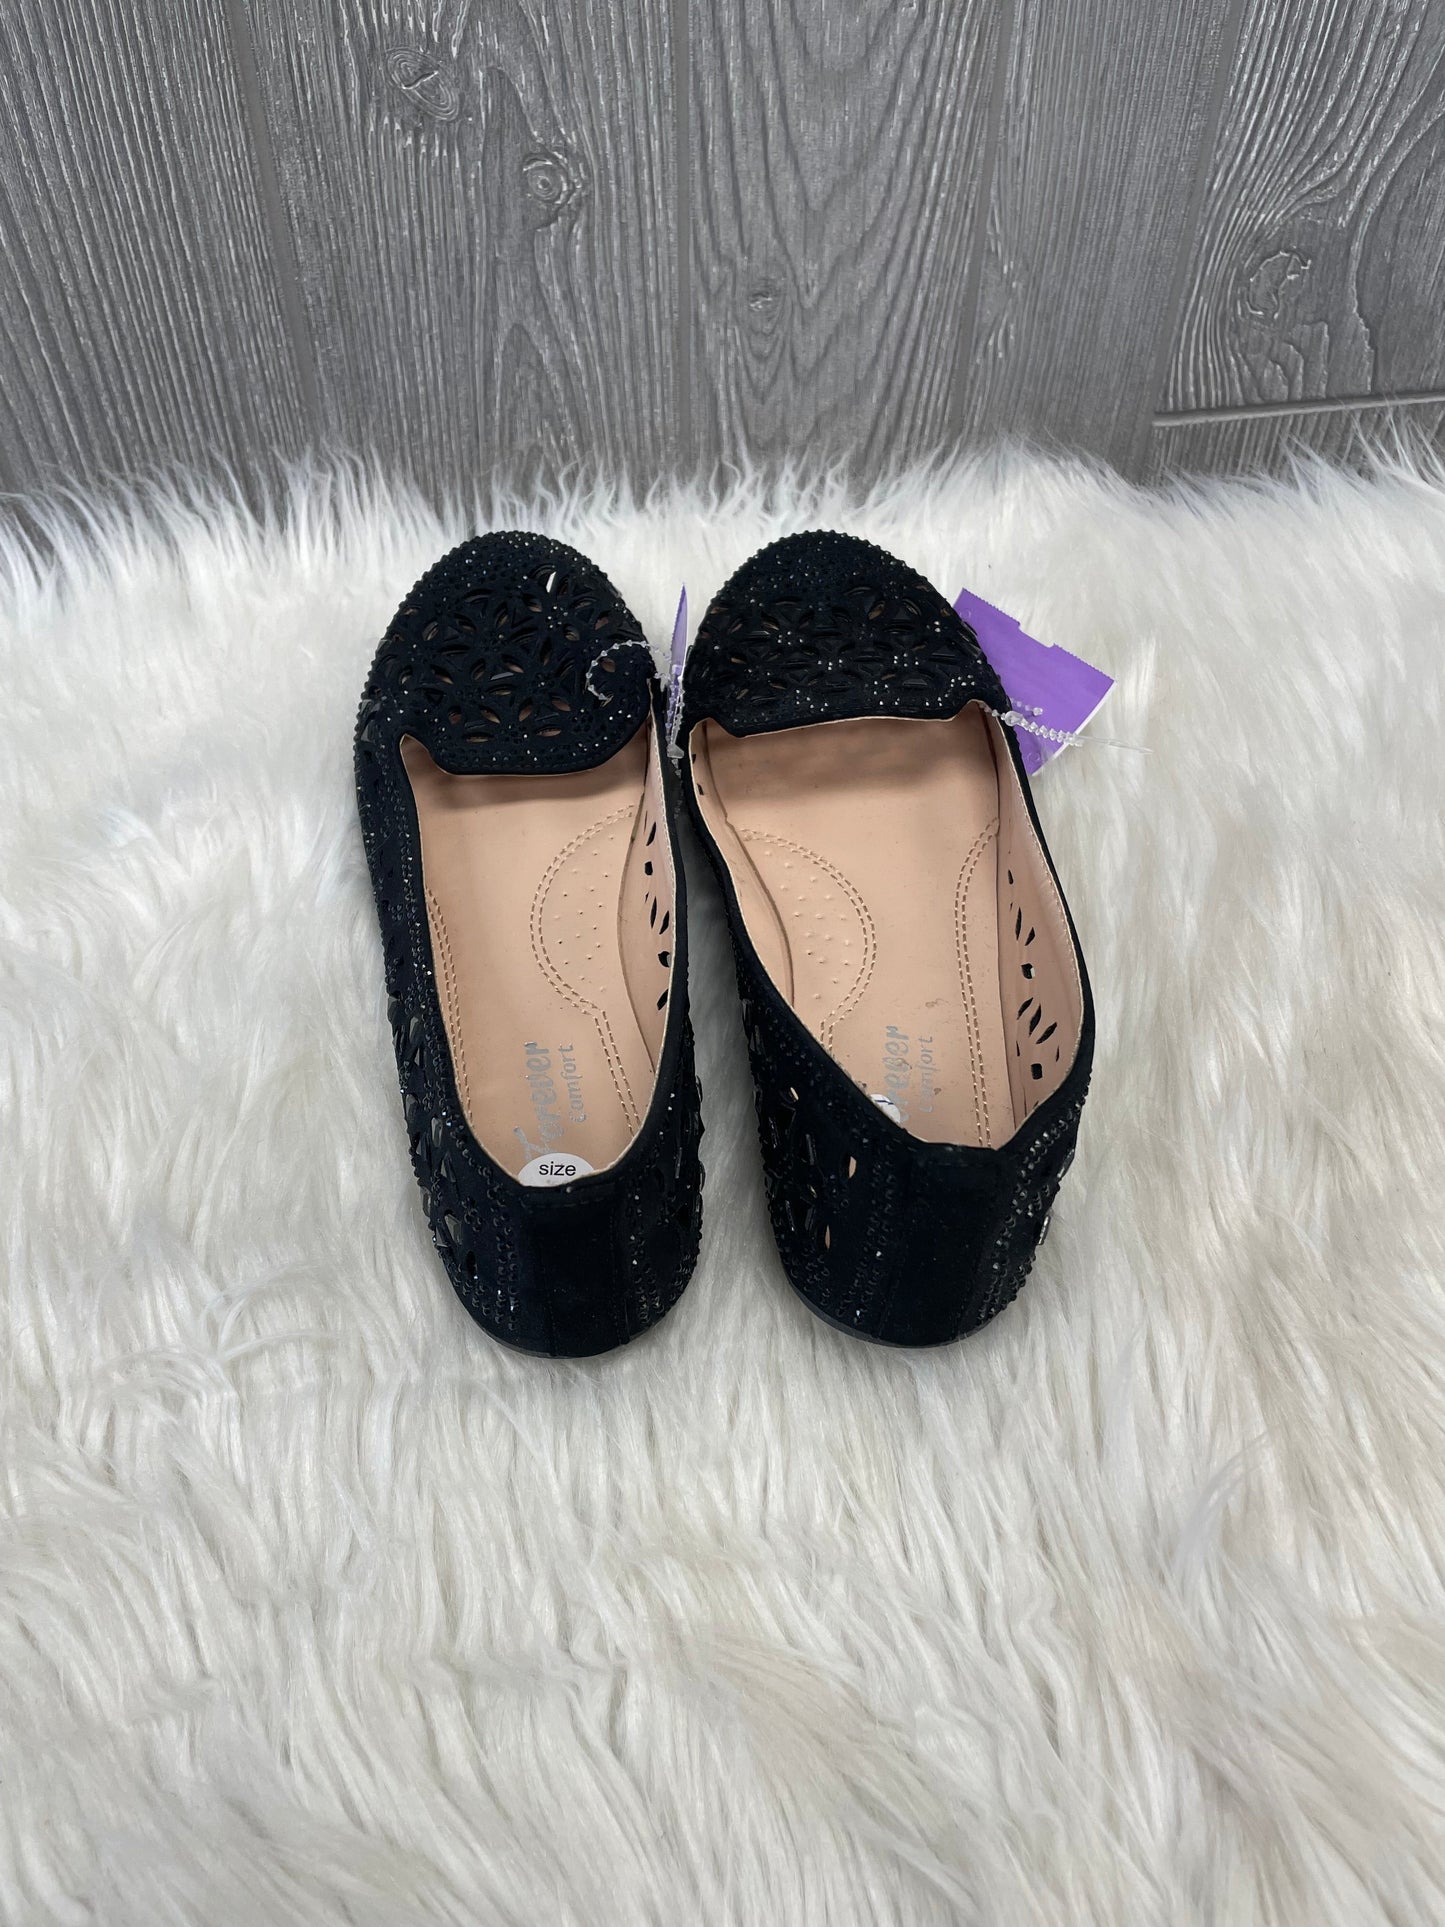 Black Shoes Flats Clothes Mentor, Size 7.5